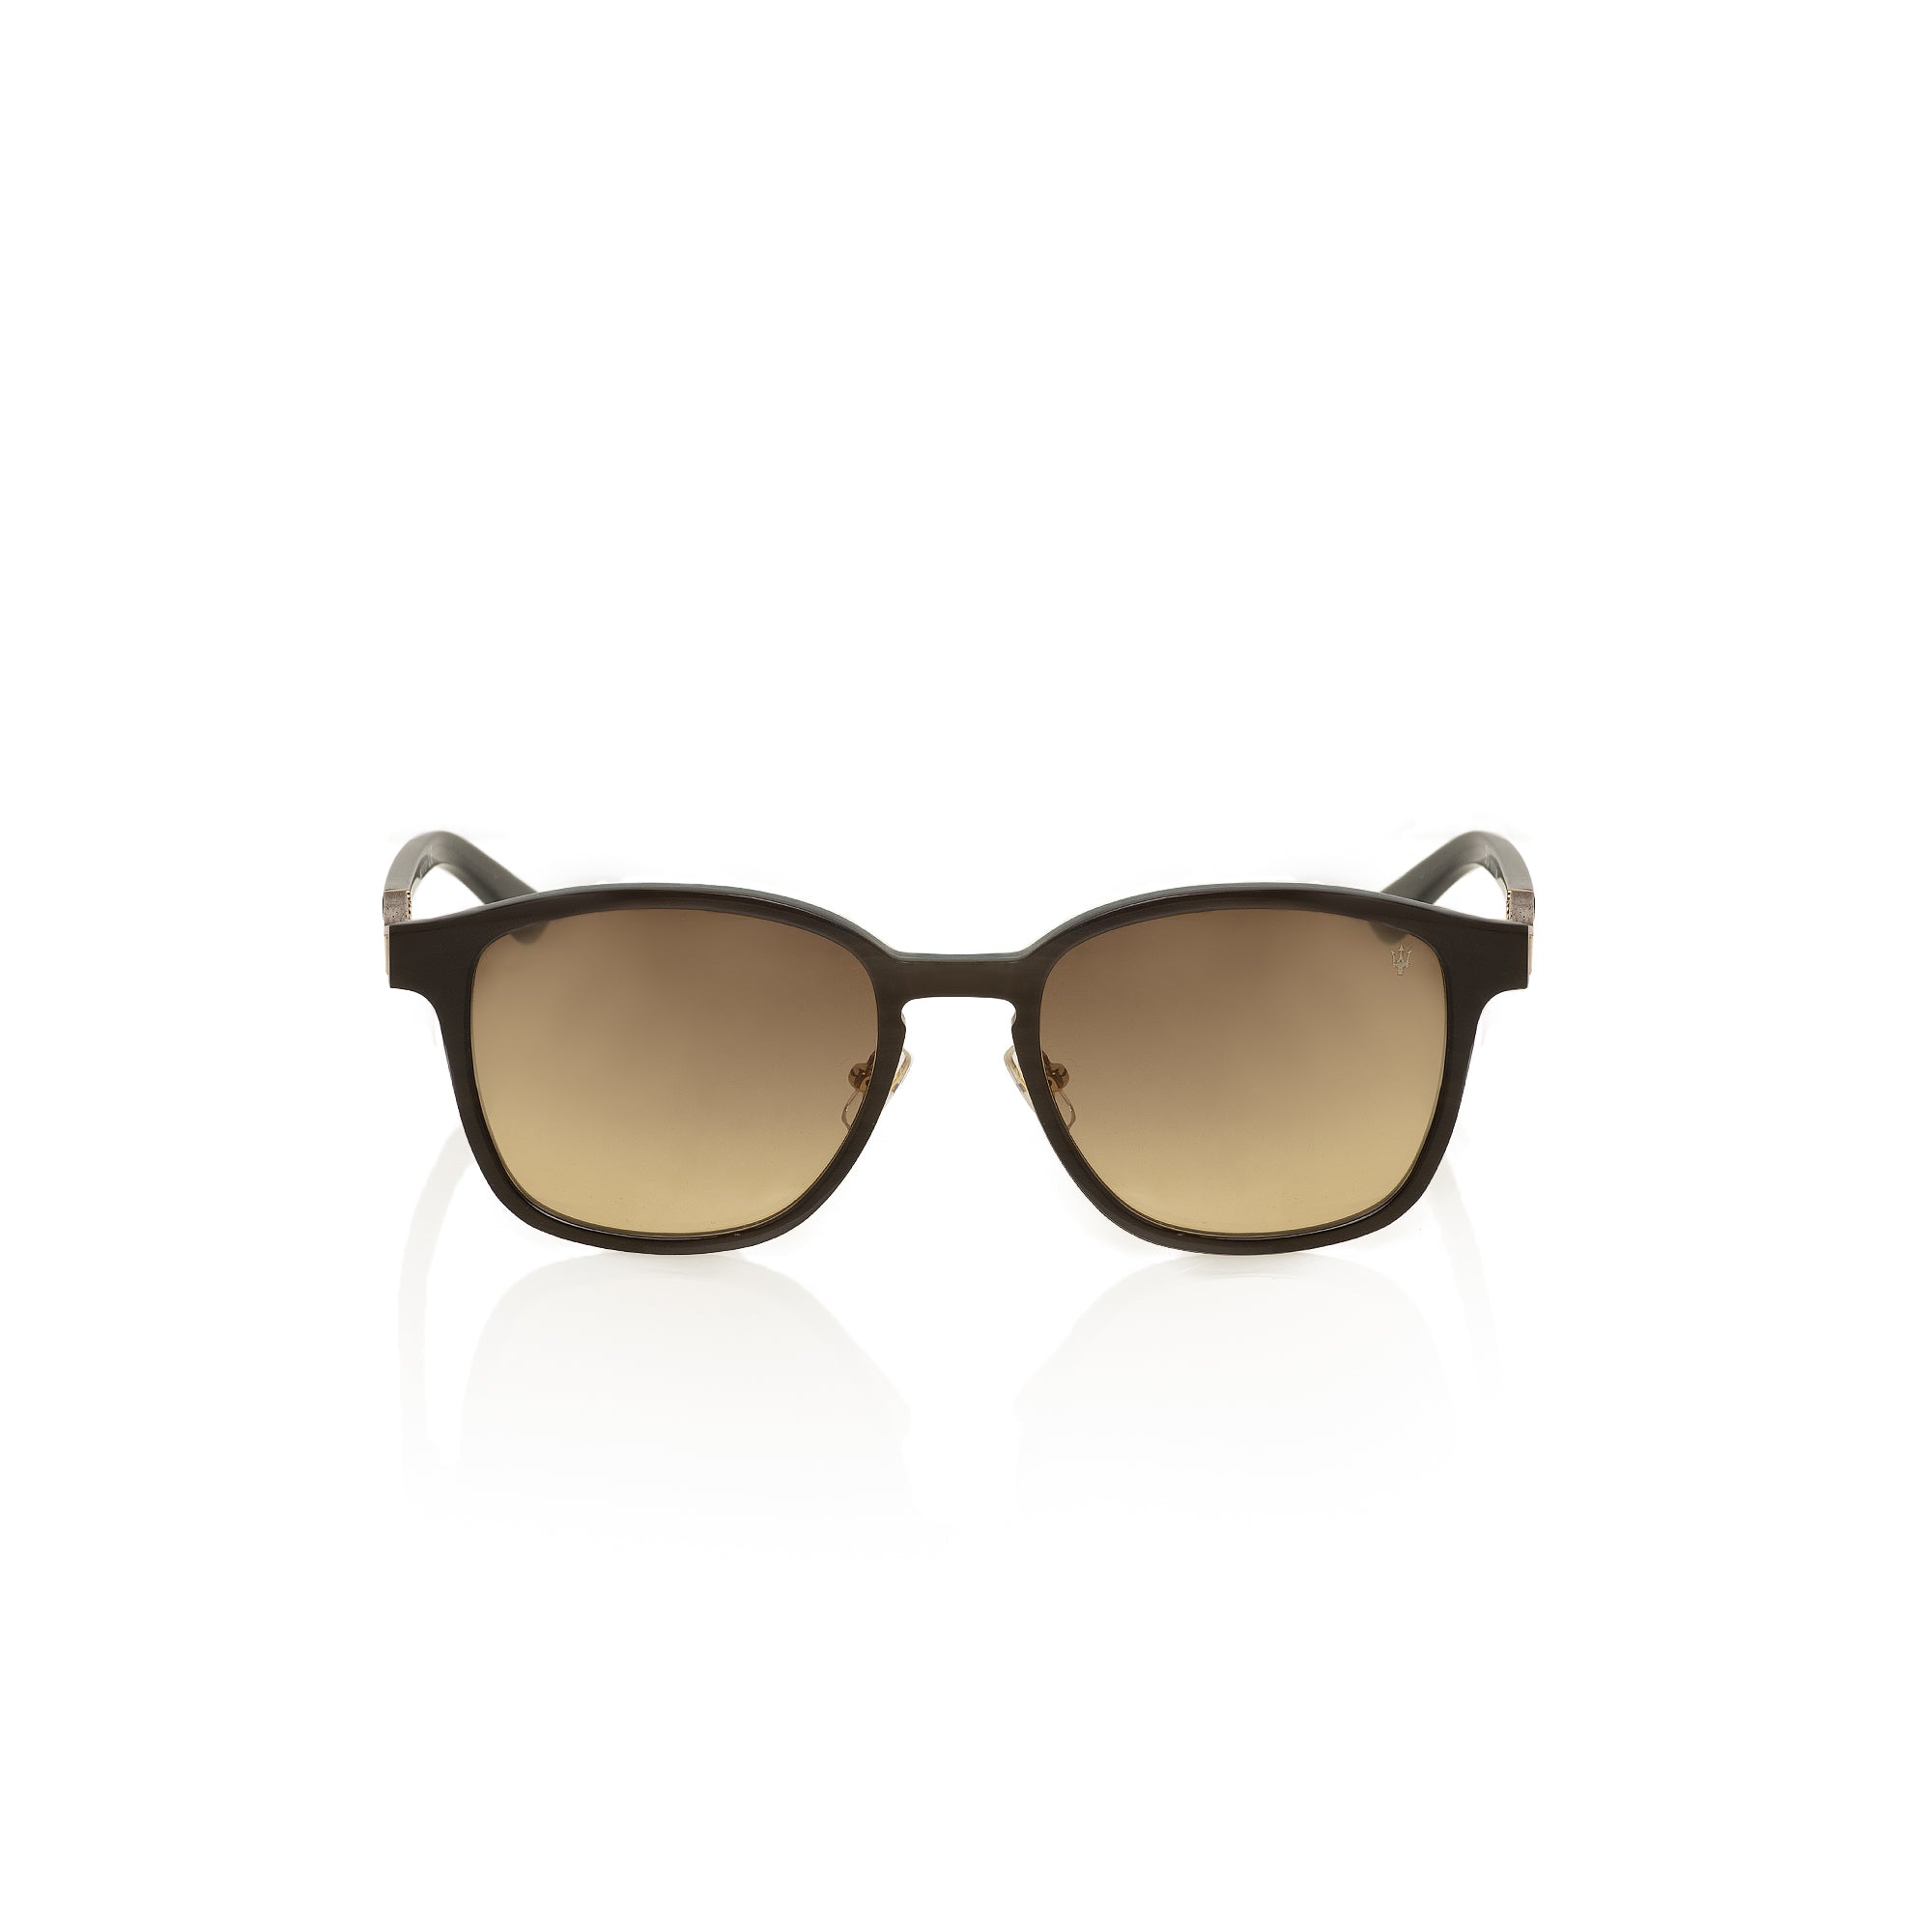 Apparel and accessories / Accessories / Sunglasses – MaseratiStore